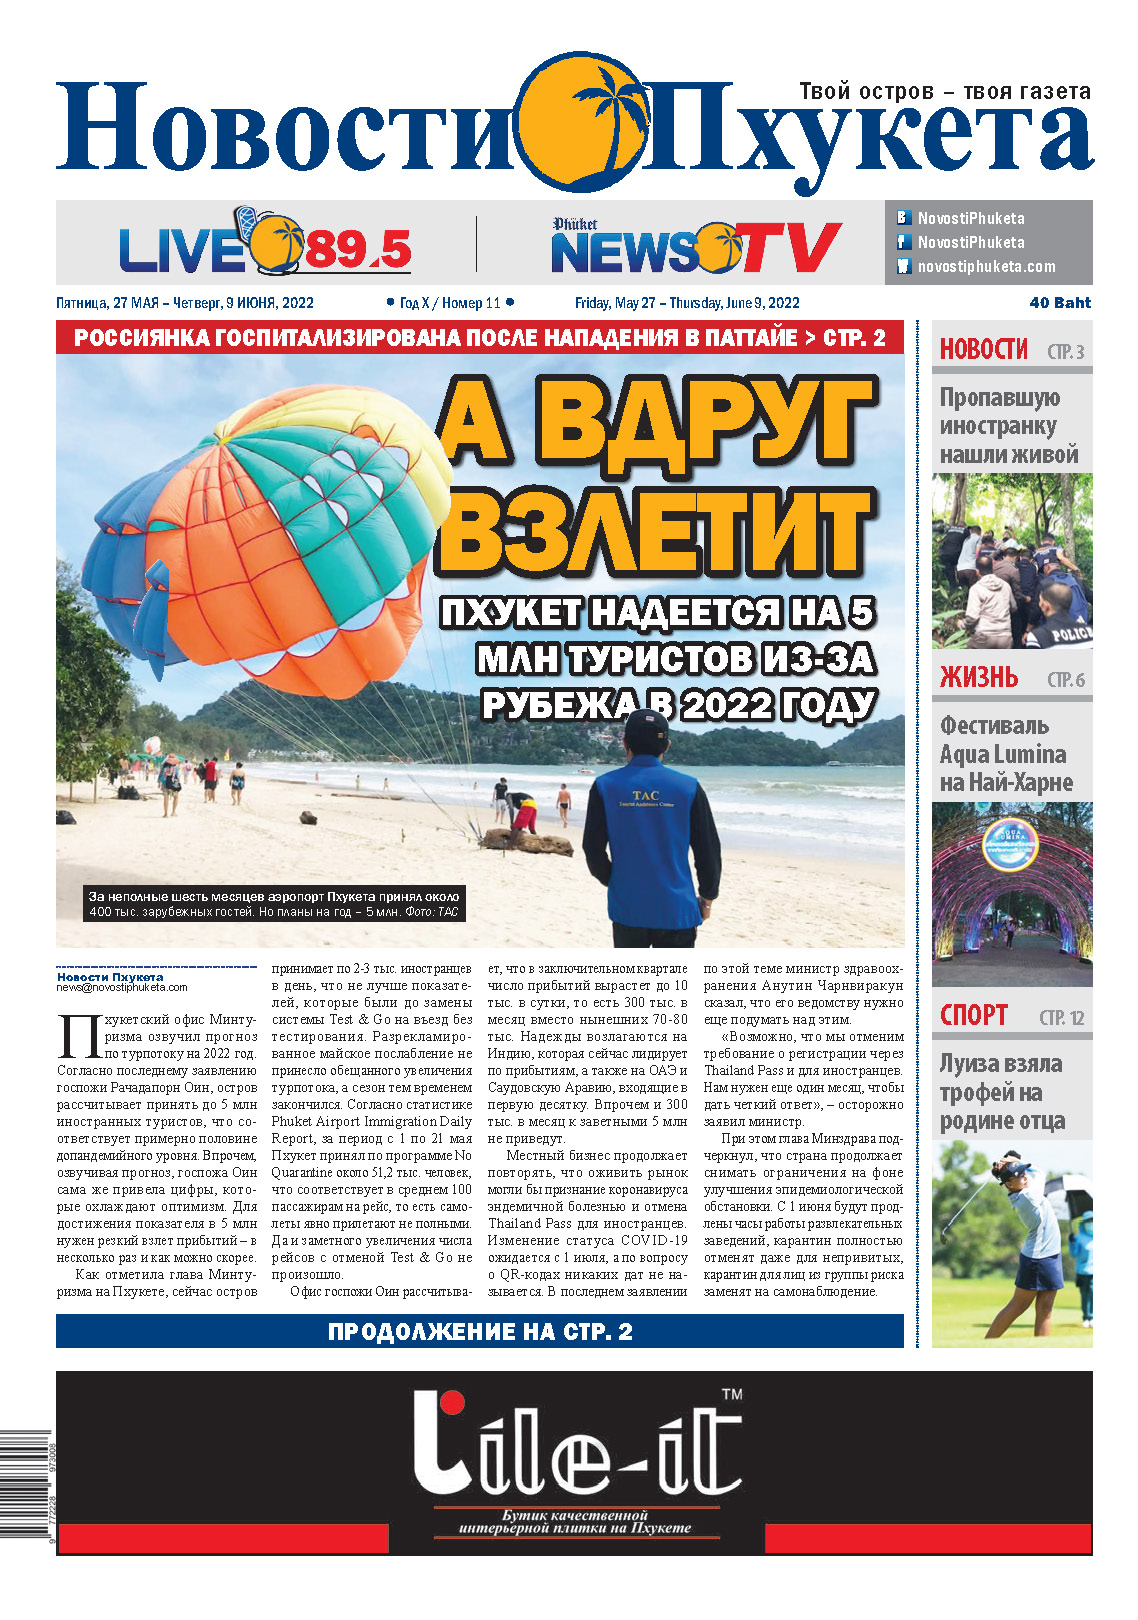 Phuket Newspaper - https://www.novostiphuketa.com/archive/27-05-2022/27-05-2022_Page_01.jpg